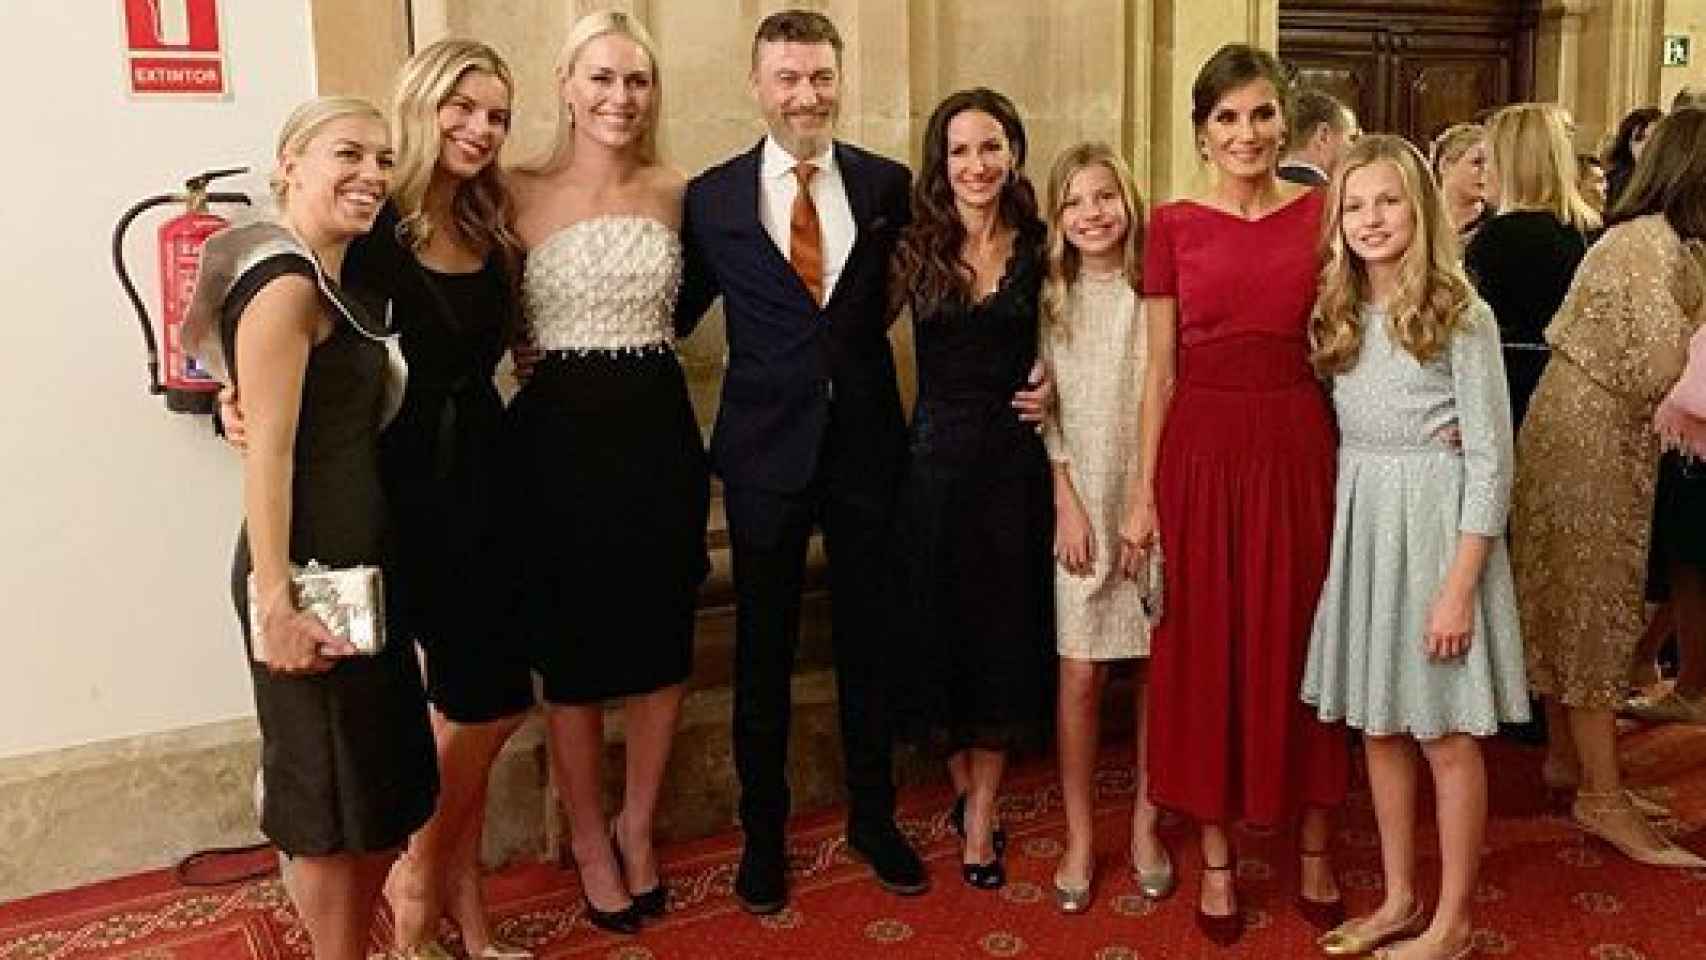 La esquiadora Lindsey Vonn, Robert Gavin Bonnar, Telma Ortiz, la infanta Sofía, la reina Letizia y la princesa Leonor.